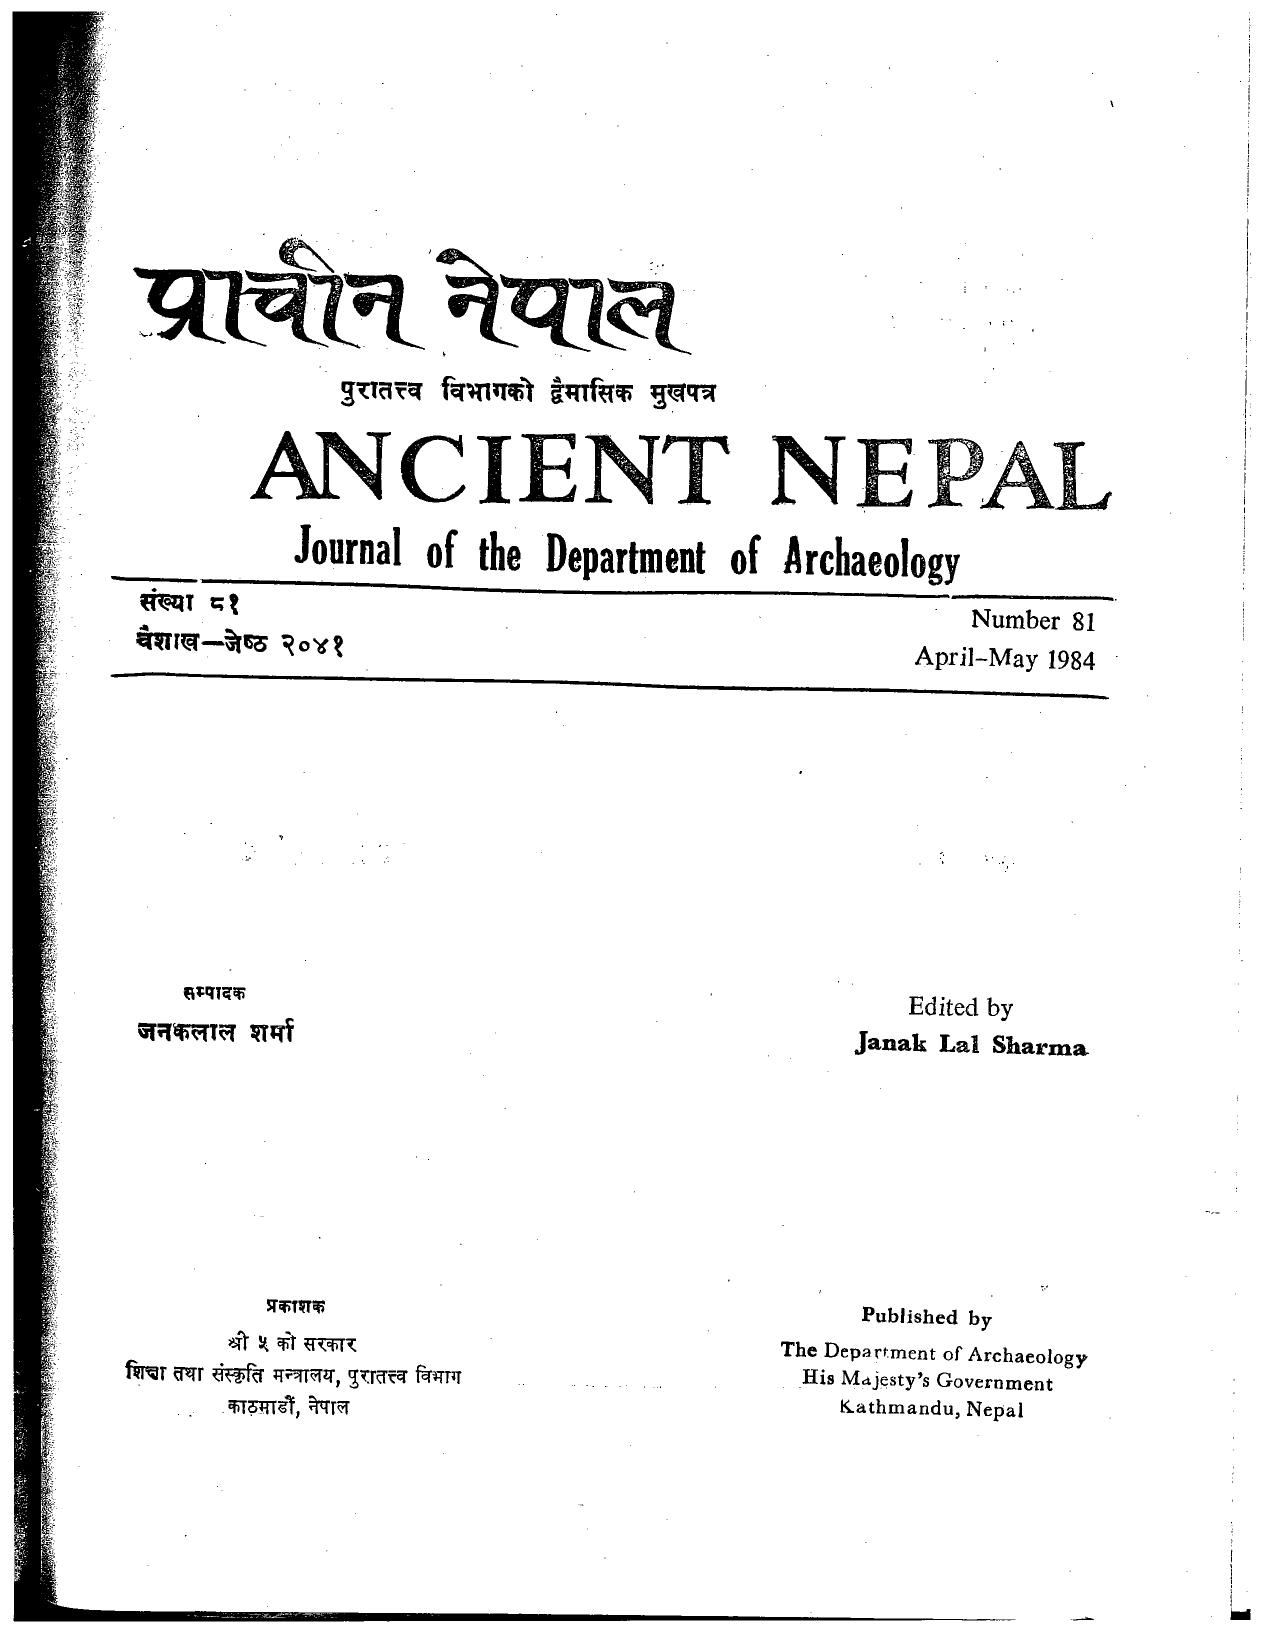 Ancient Nepal 81